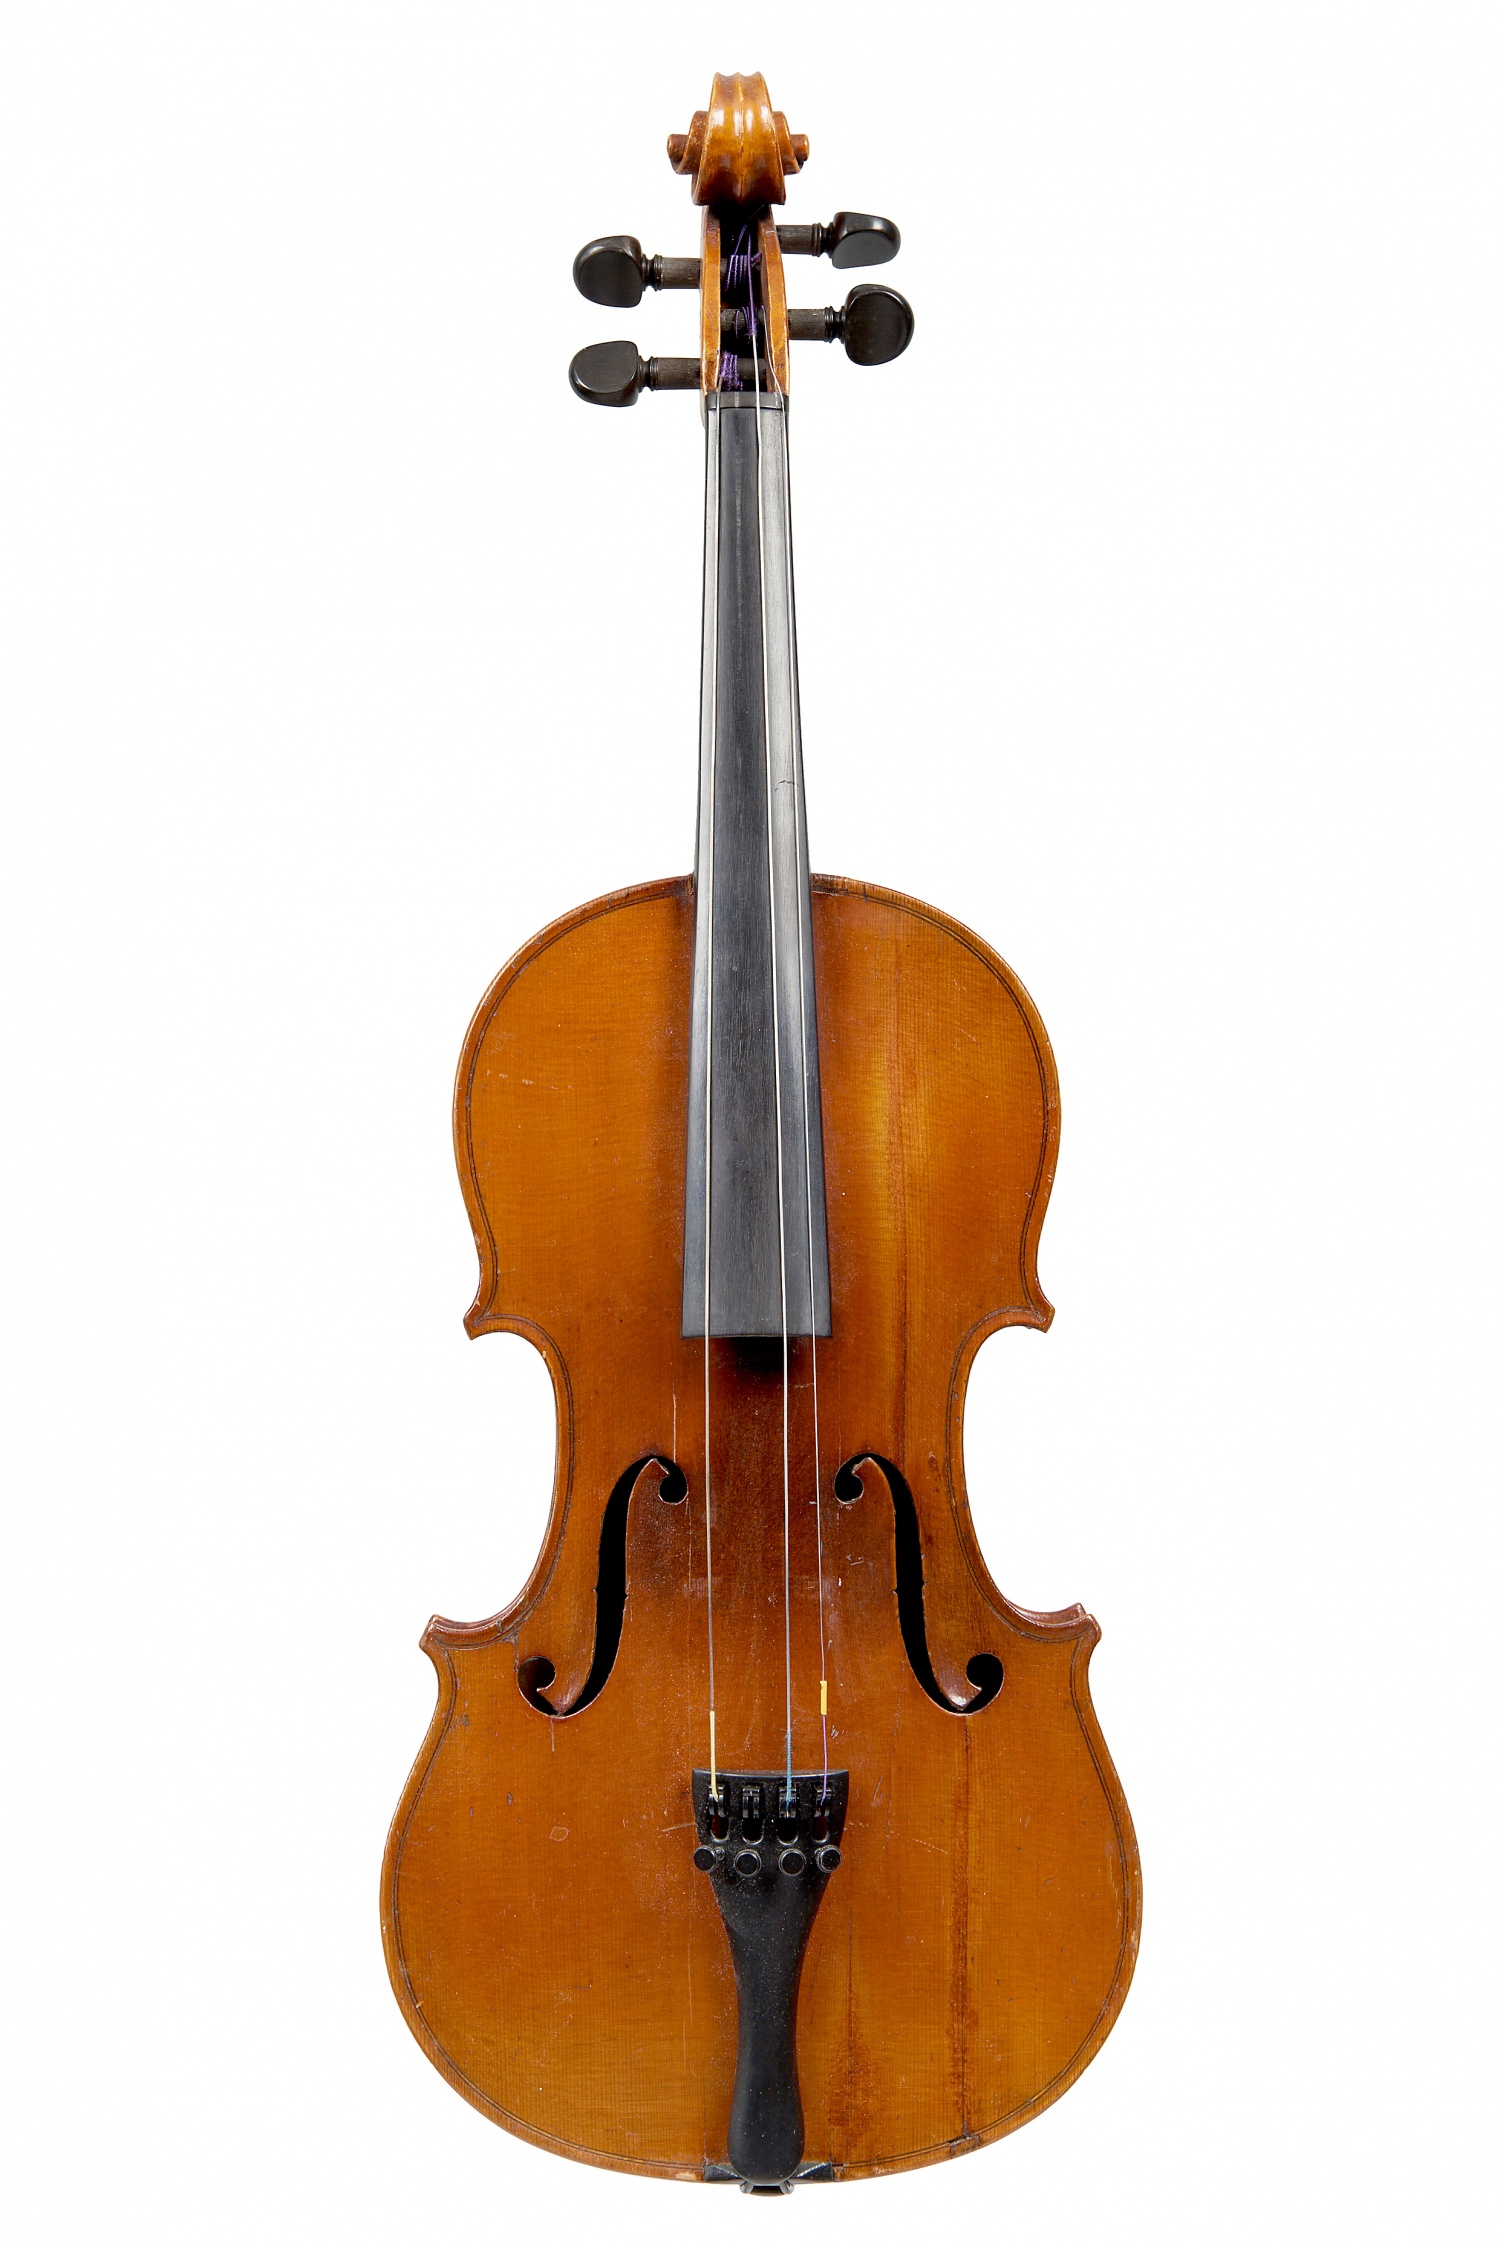 3 violins